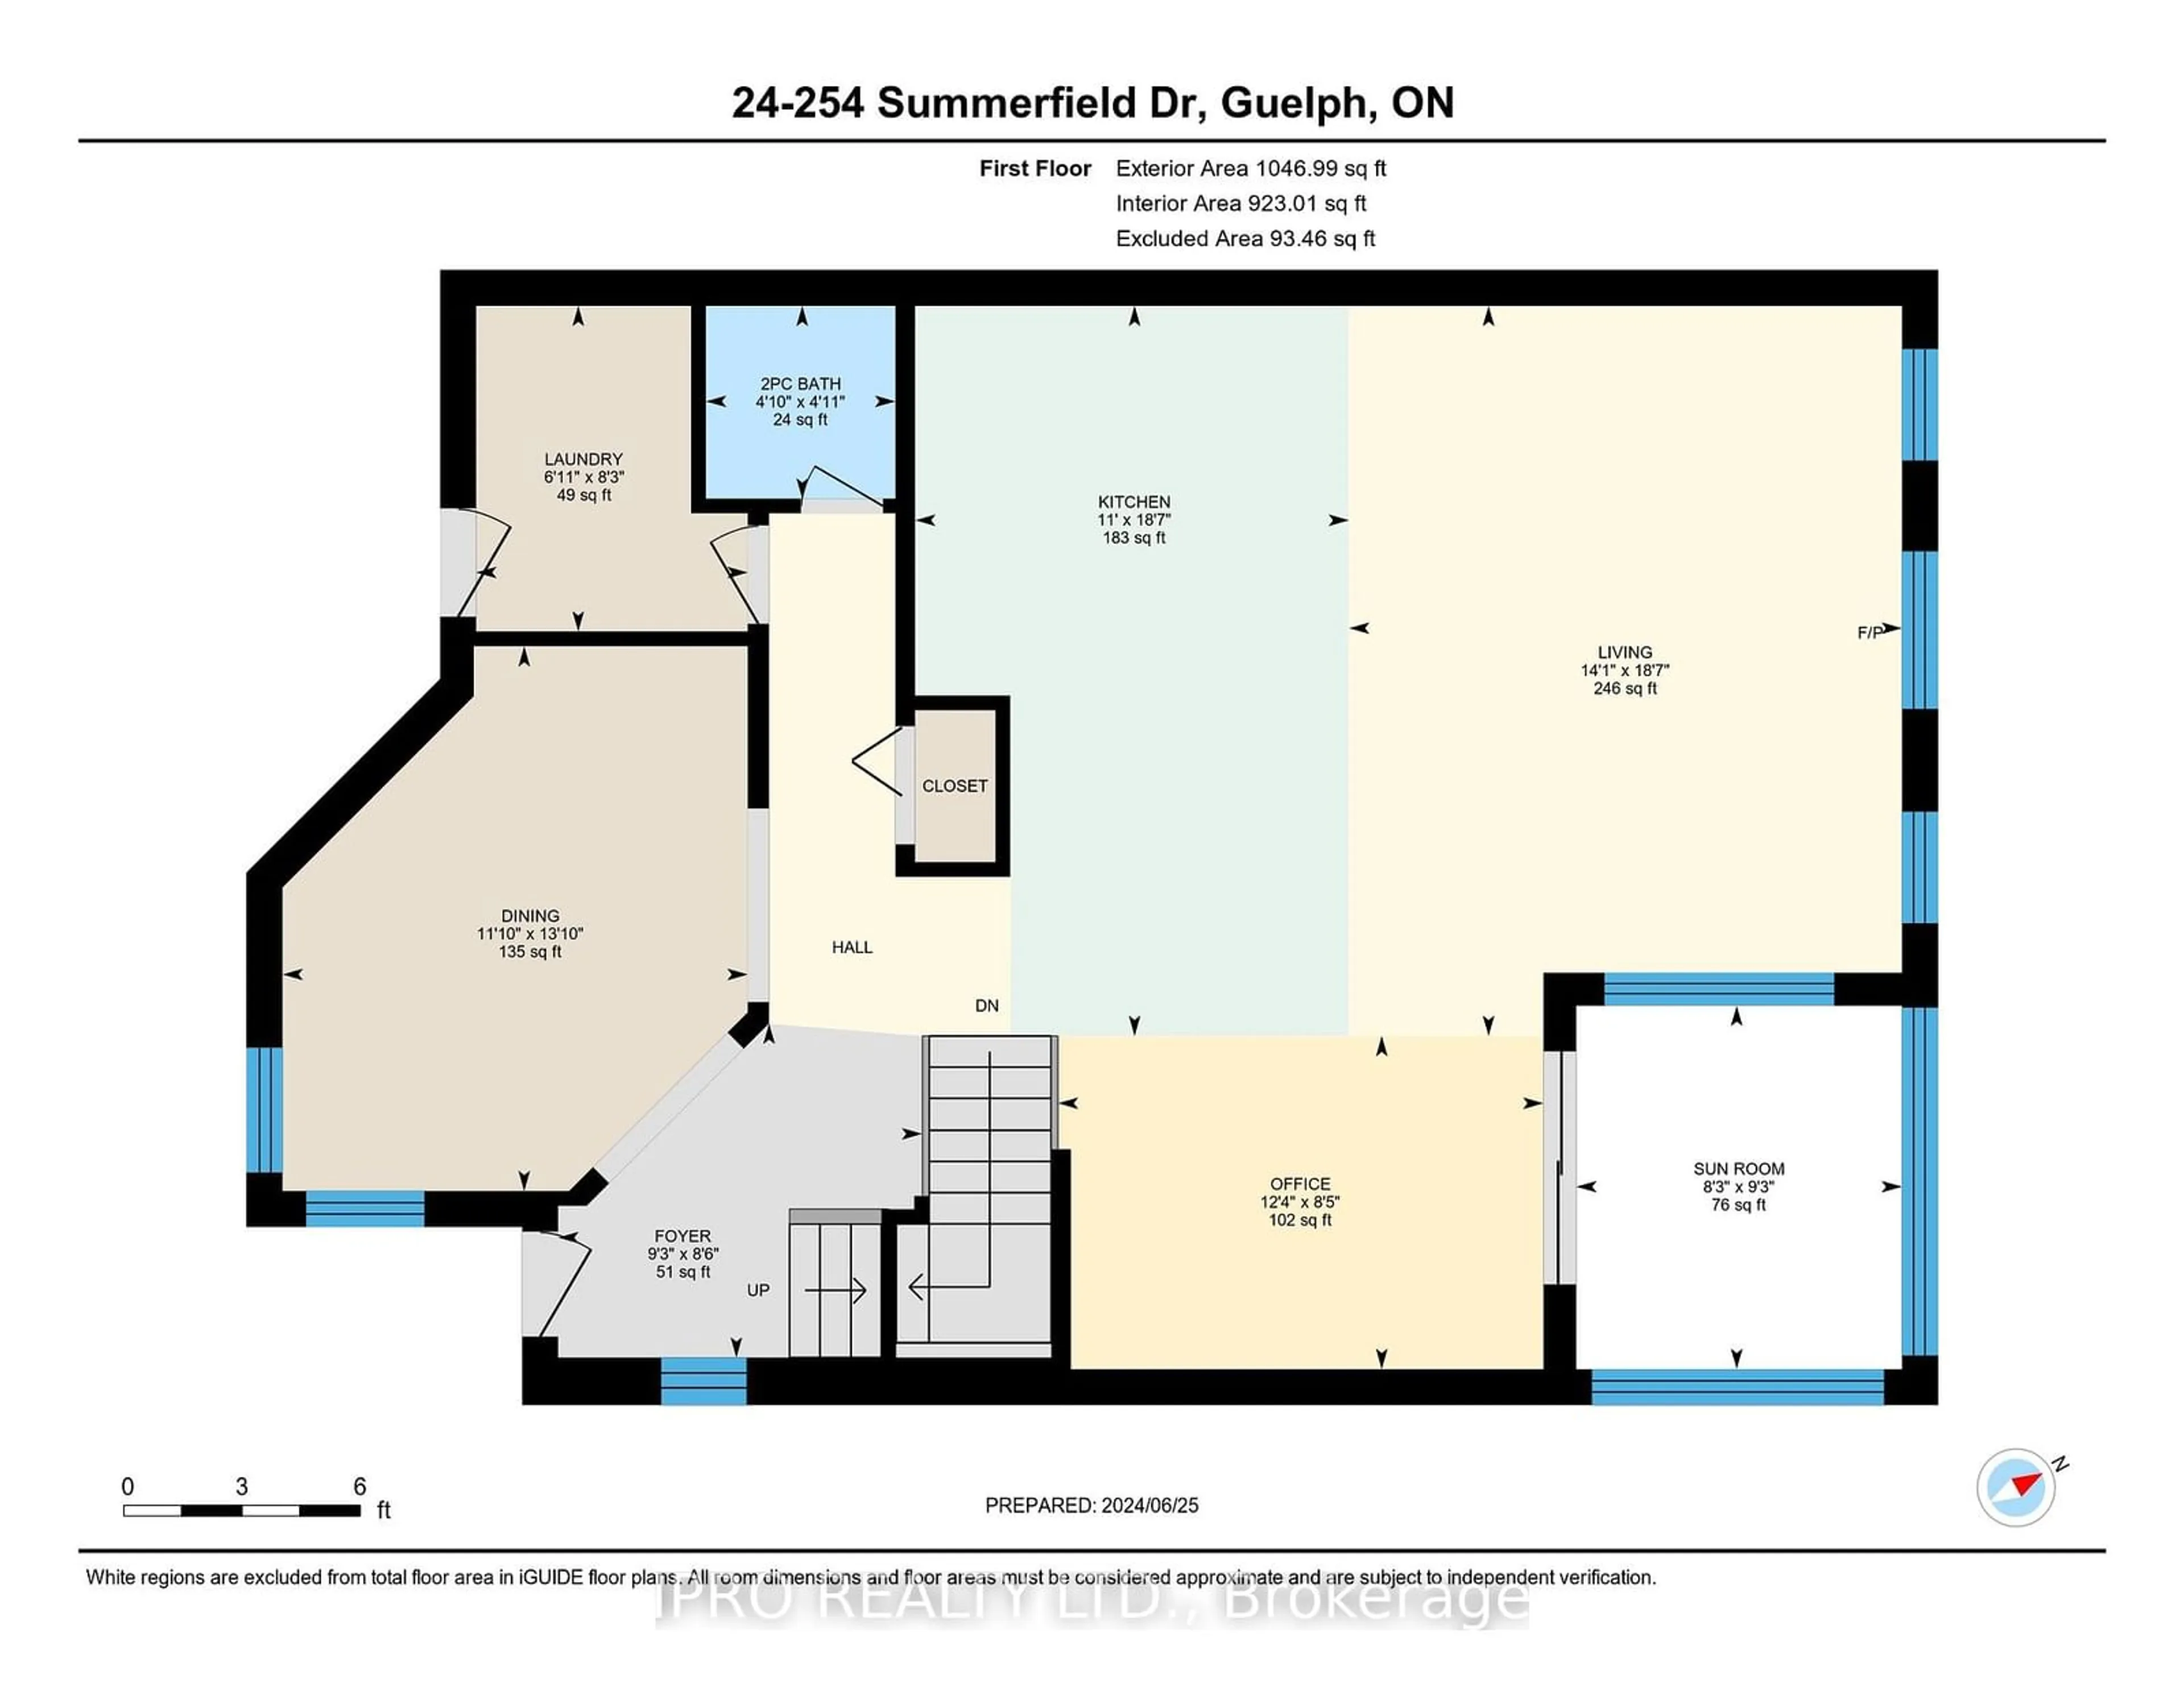 Floor plan for 254 Summerfield Dr #24, Guelph Ontario N1L 1R4